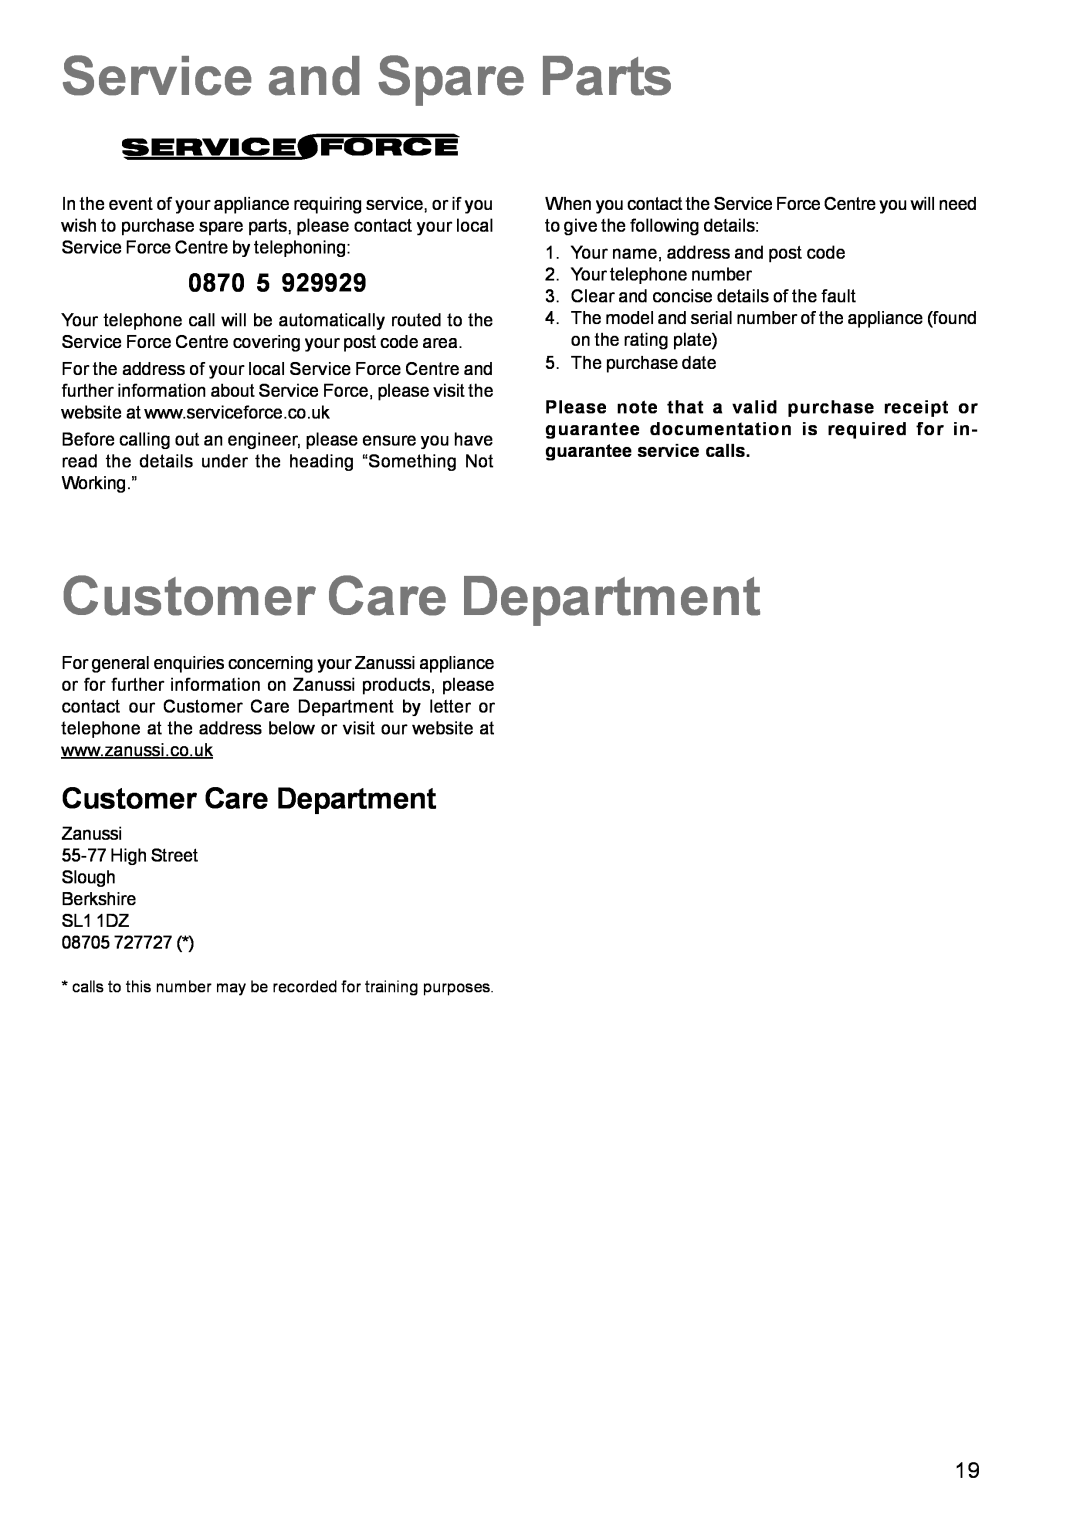 Zanussi ZCE 631 manual Service and Spare Parts, Customer Care Department, 0870 